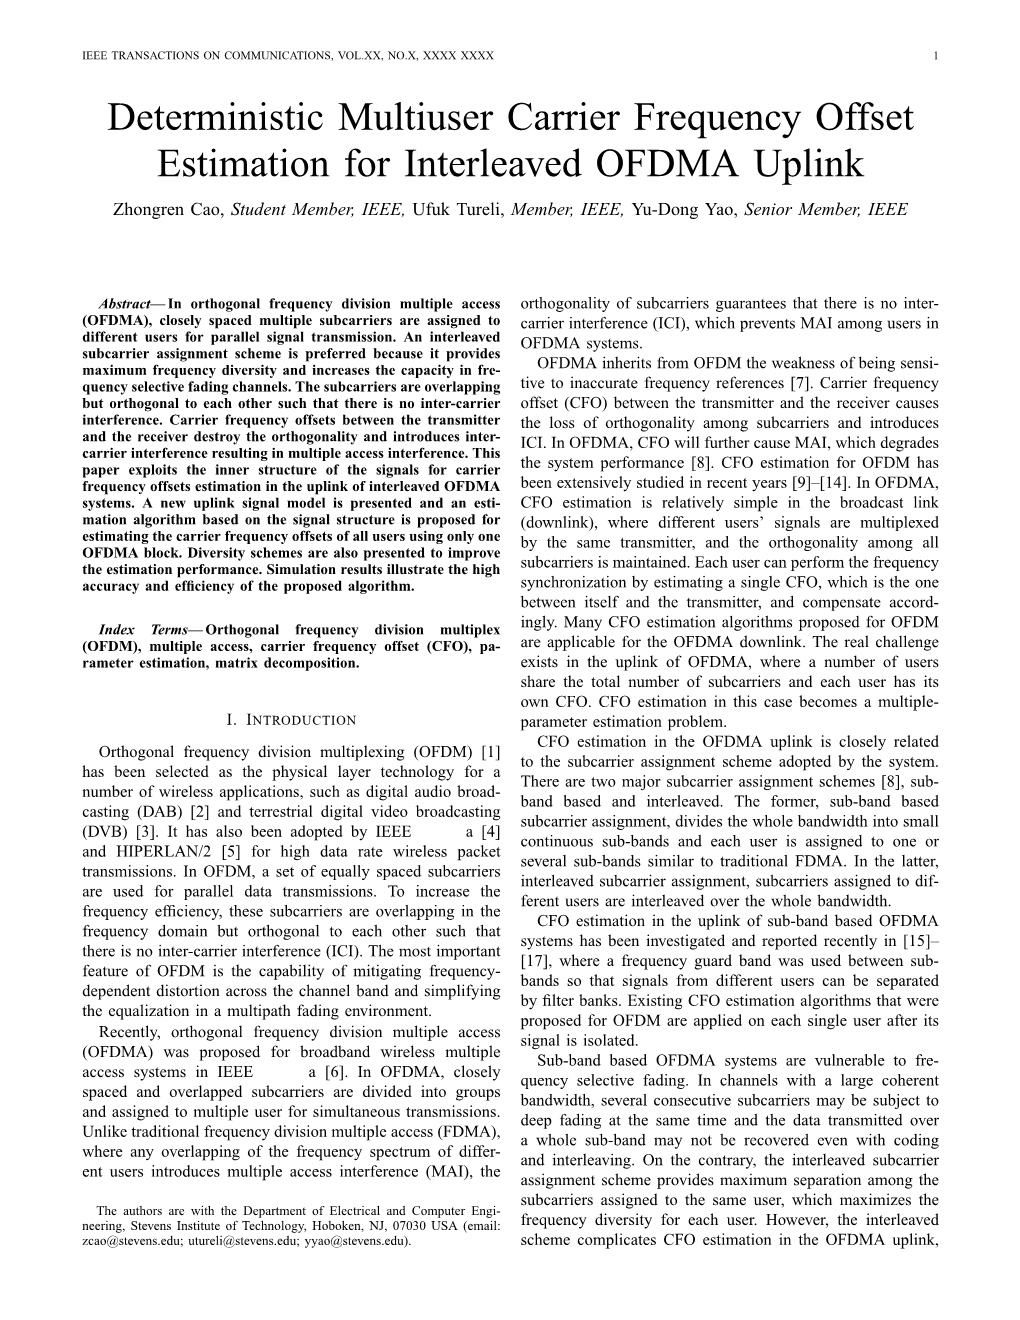 Deterministic Multiuser Carrier-Frequency Offset Estimation for Interleaved OFDMA Uplink